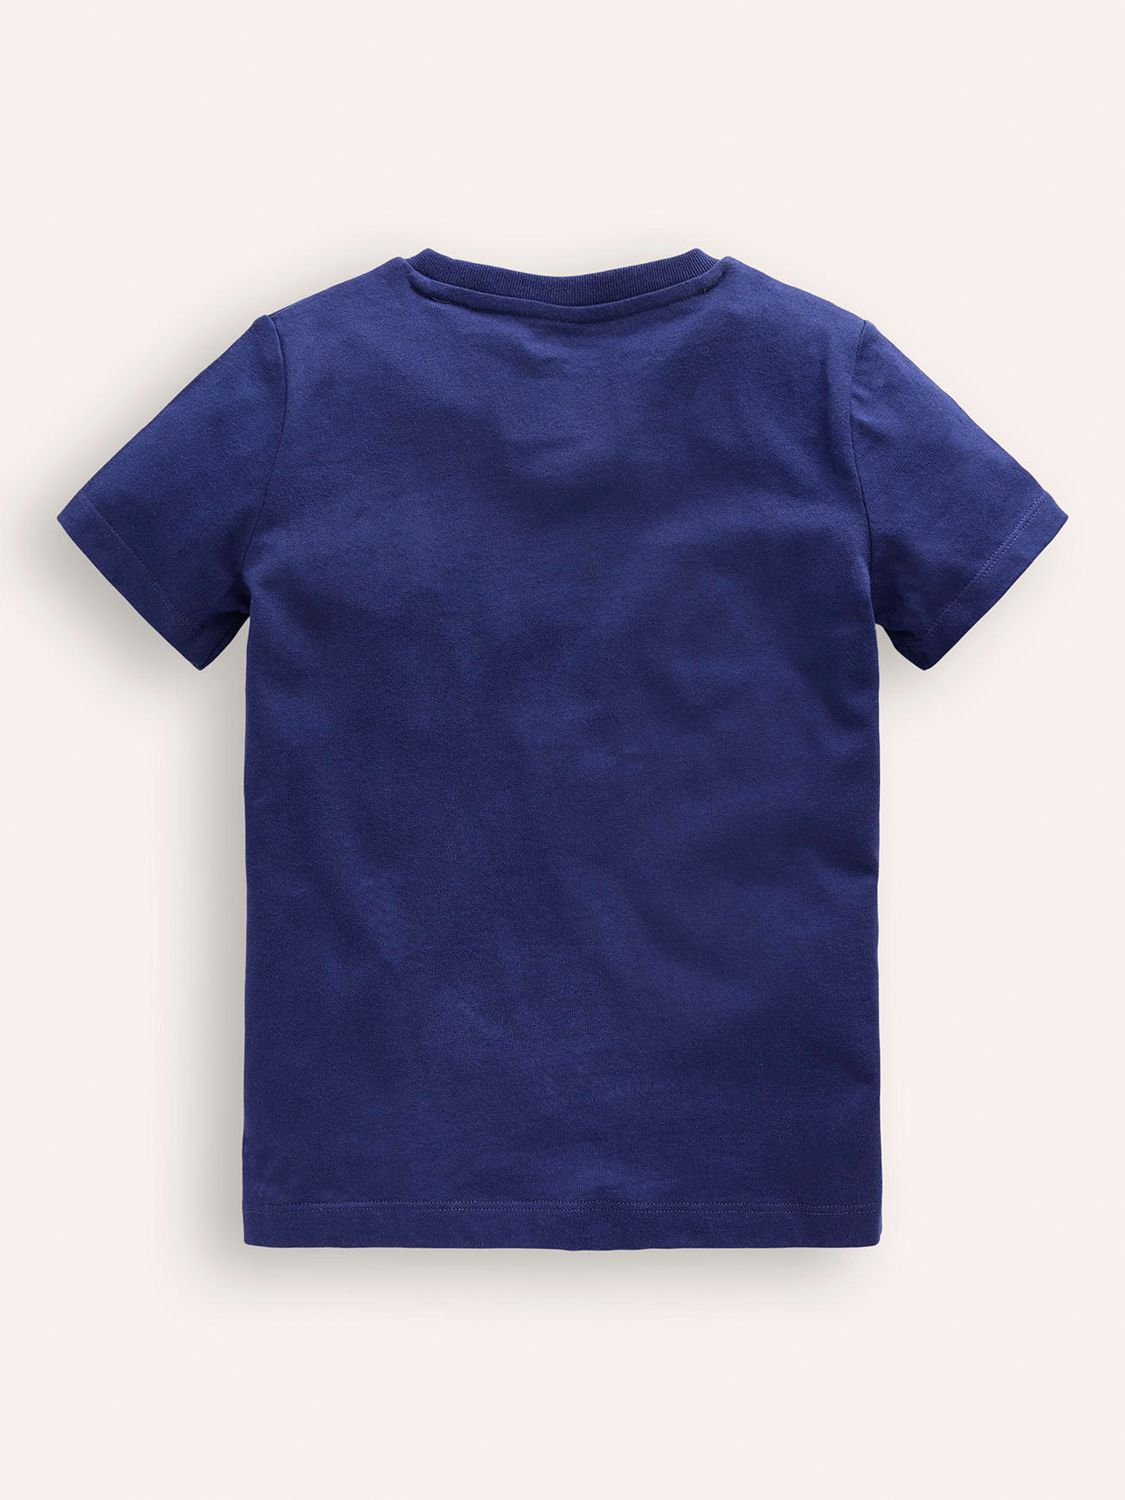 Mini Boden Kids' Glow Frog T-Shirt, College Navy, 2-3 years